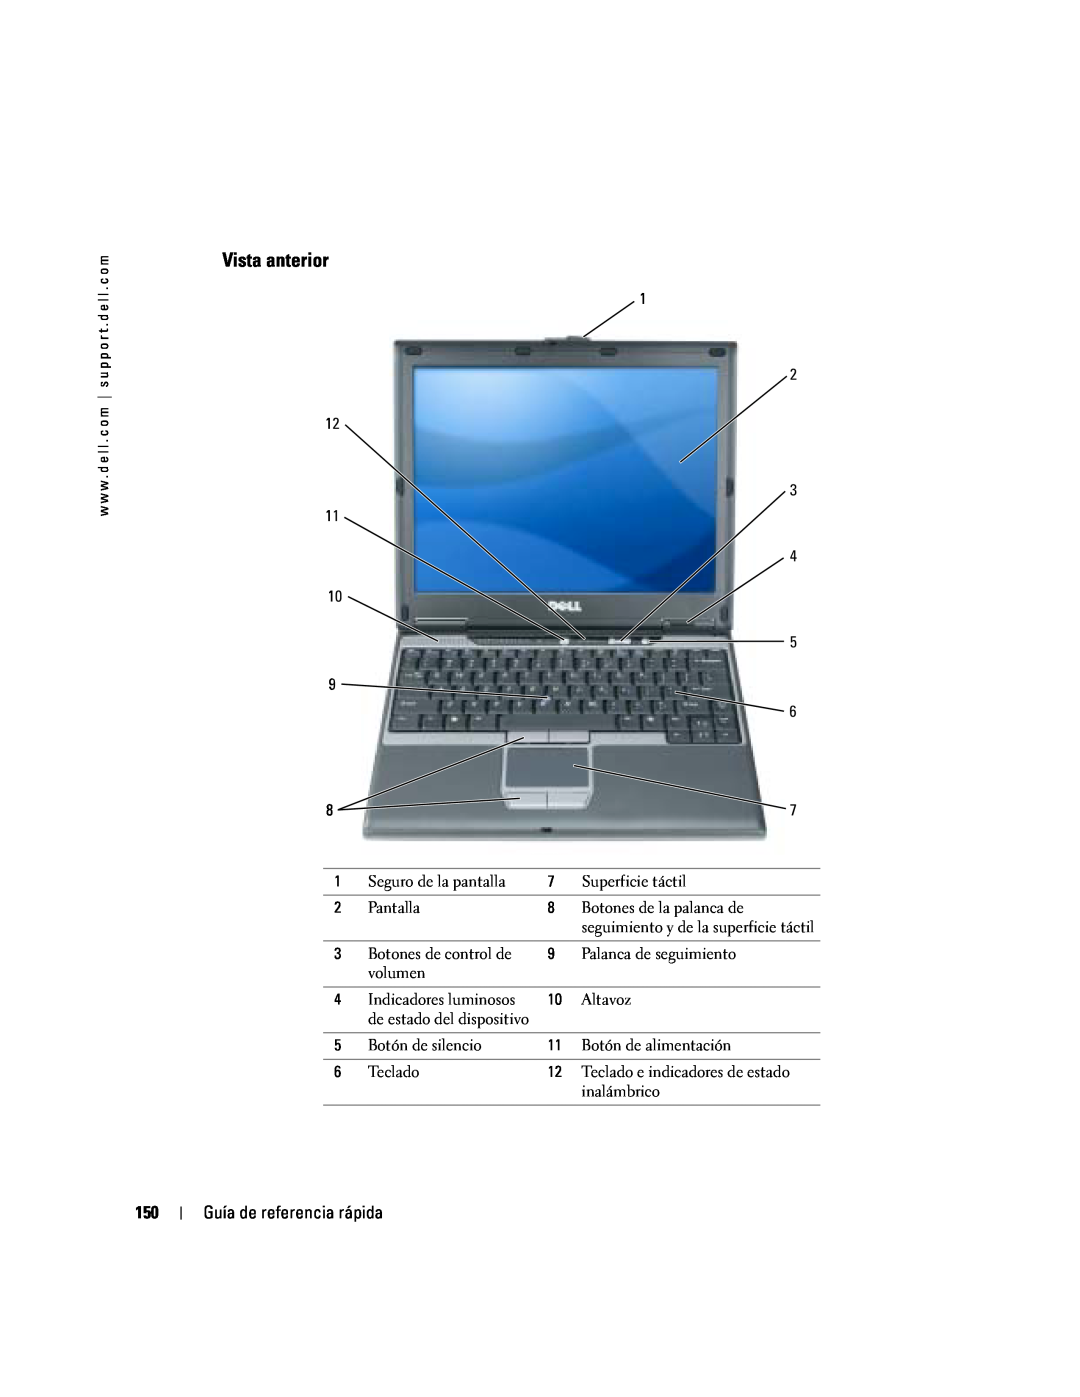 Dell PP06S manual Vista anterior 